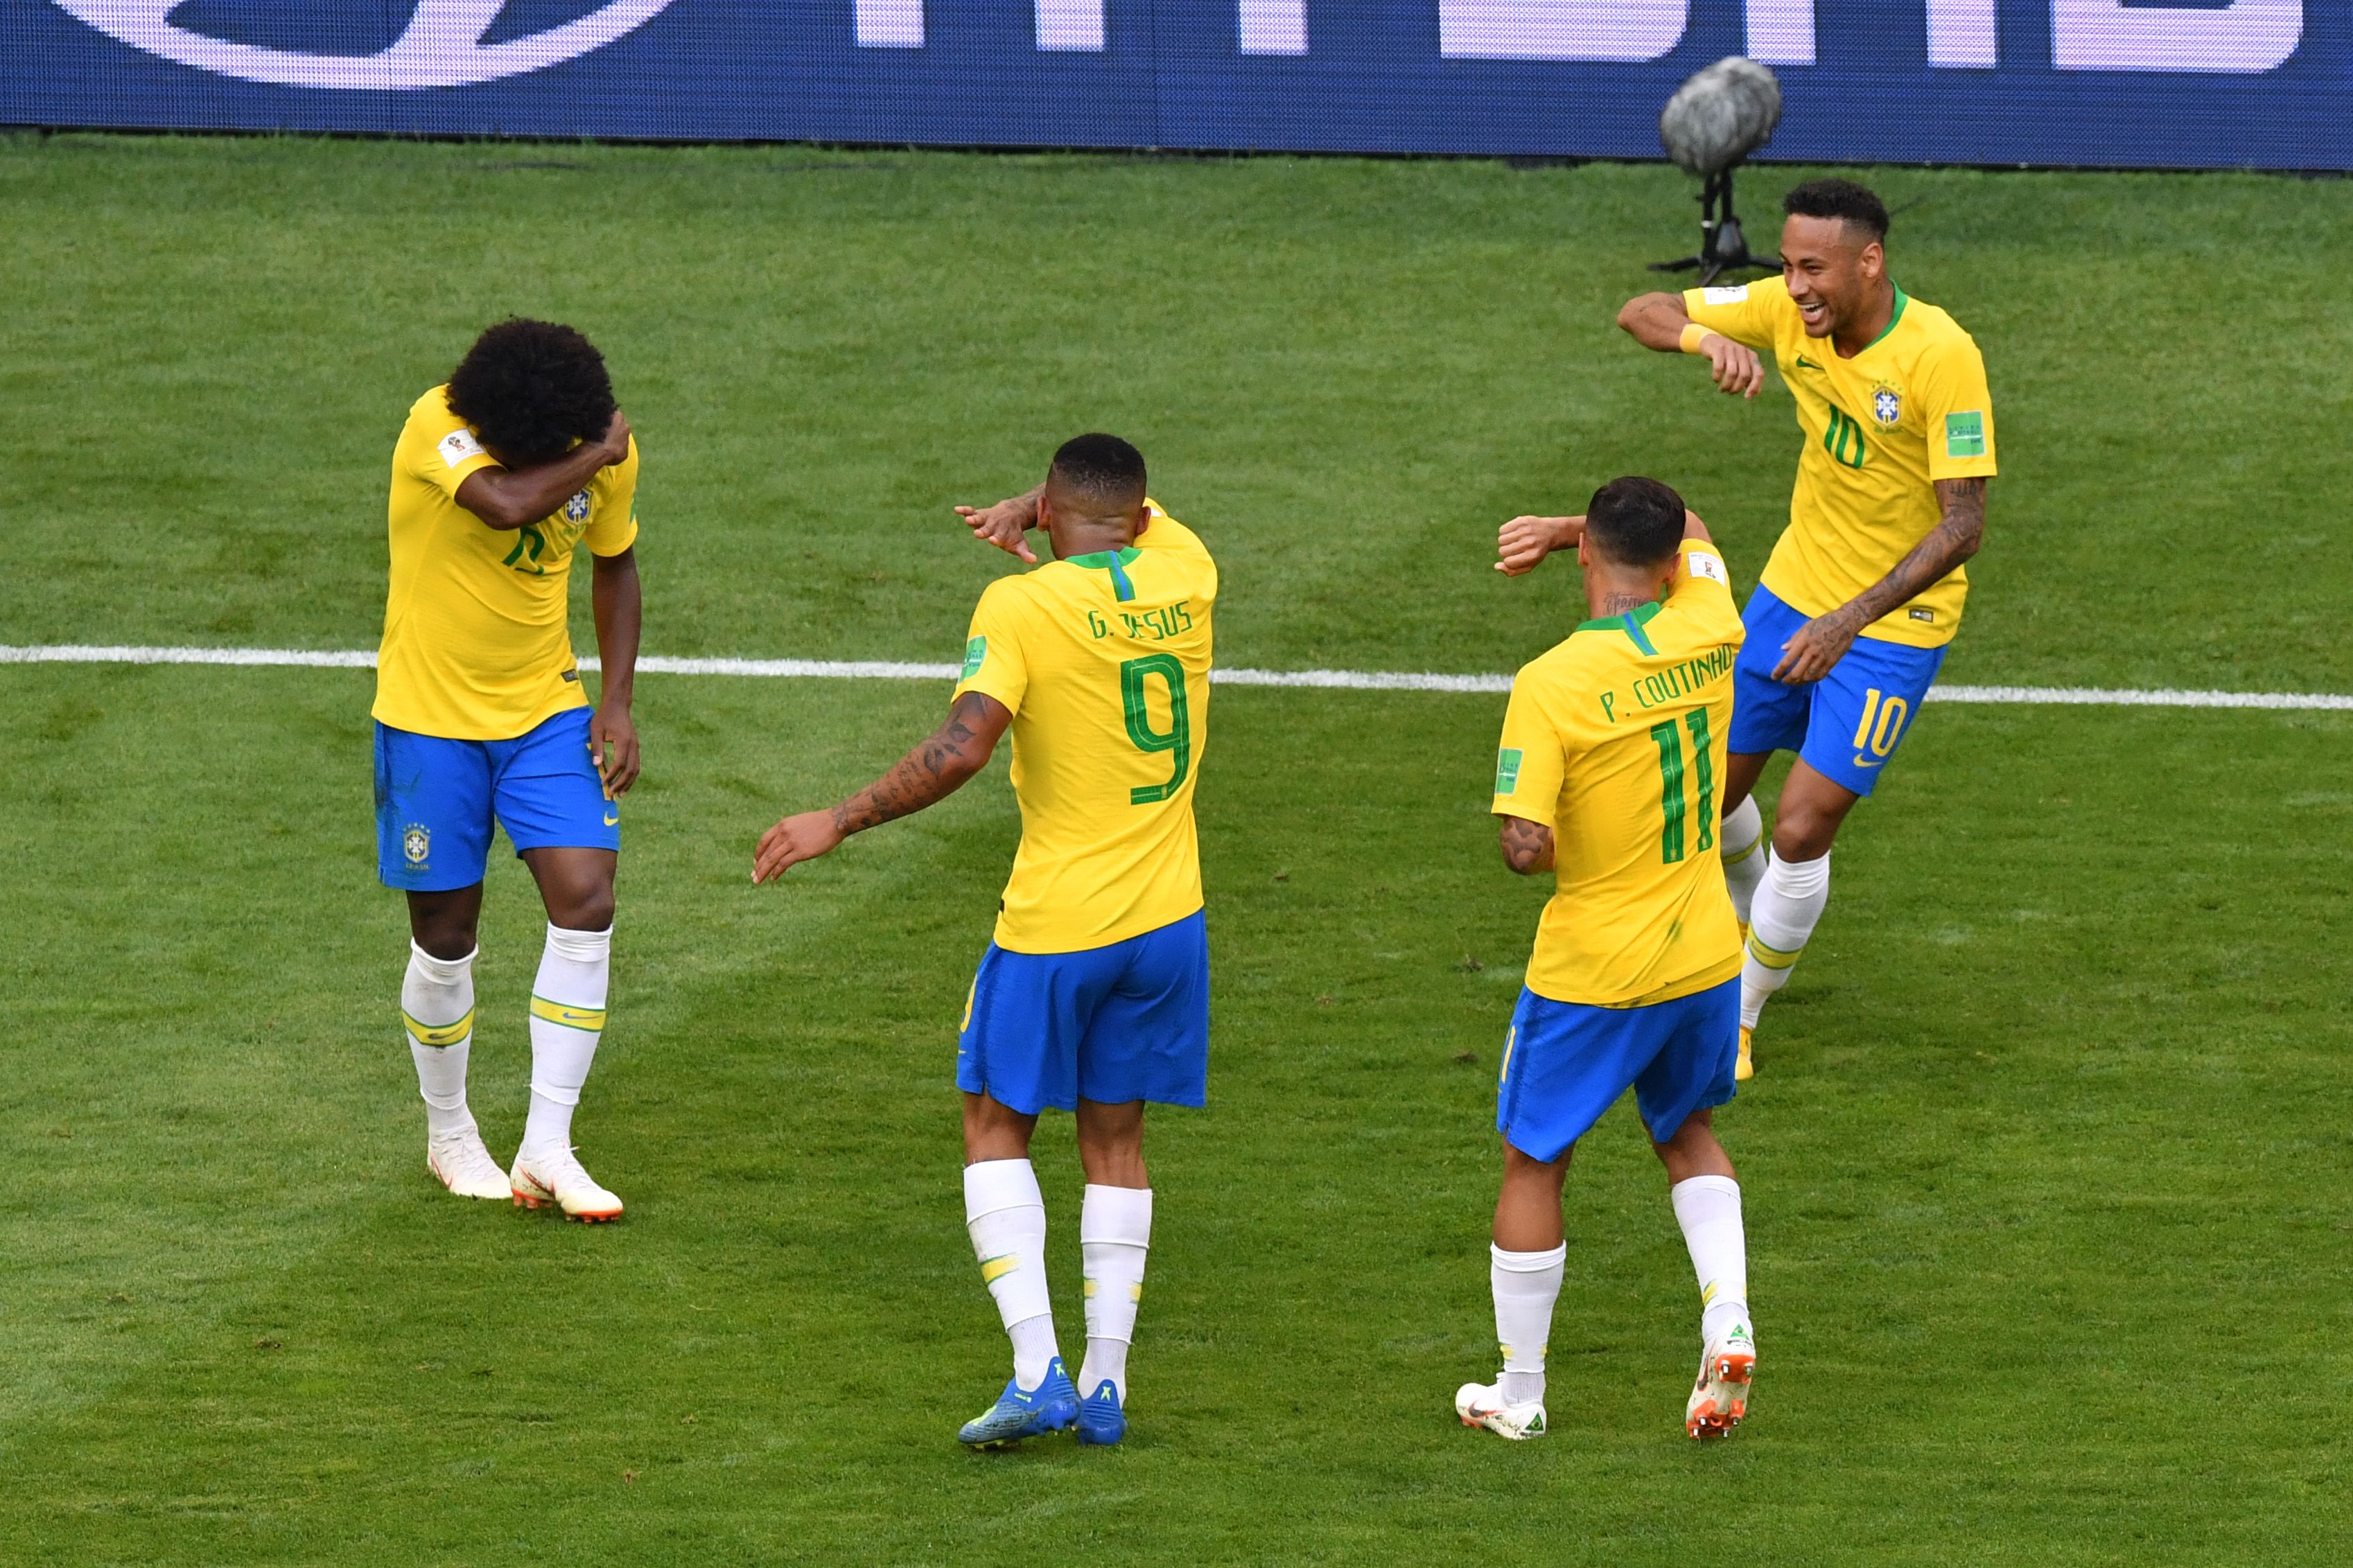 Torrent width Evaporate נבחרת ברזיל: טור בעקבות ההדחה מהמונדיאל ברוסיה | ספורט 1